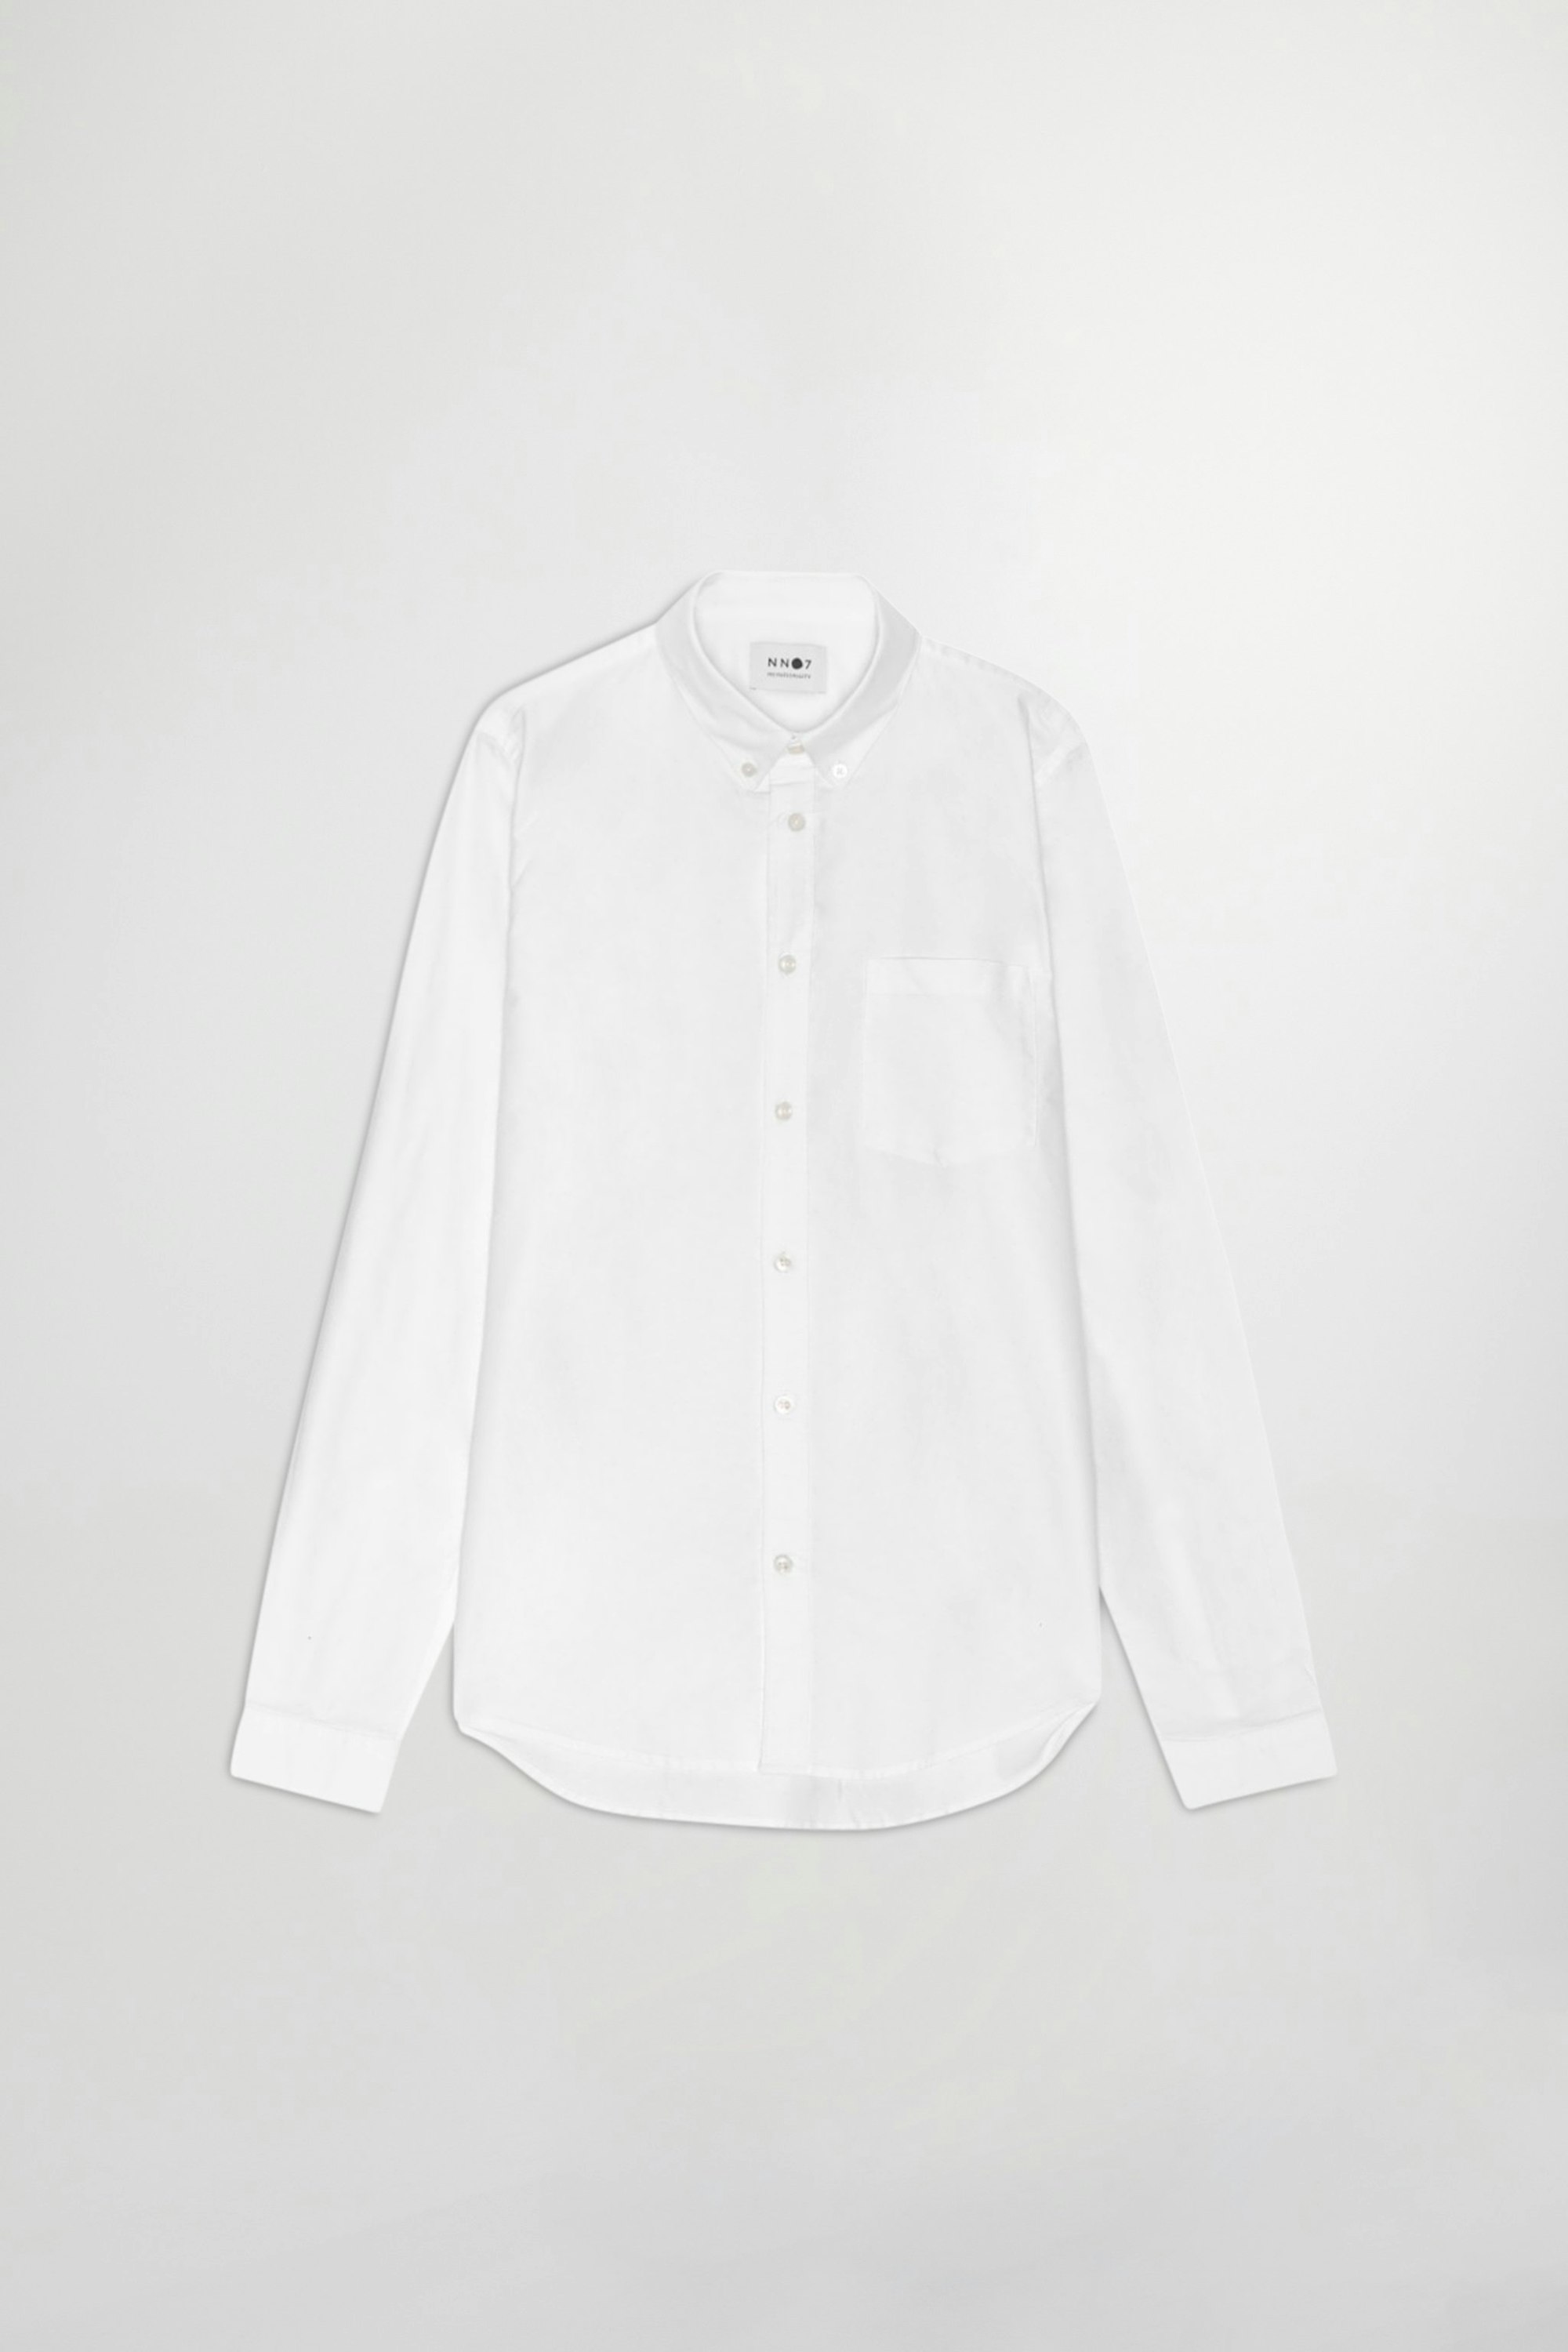 Sixten 5677 men's shirt - White - Buy online at